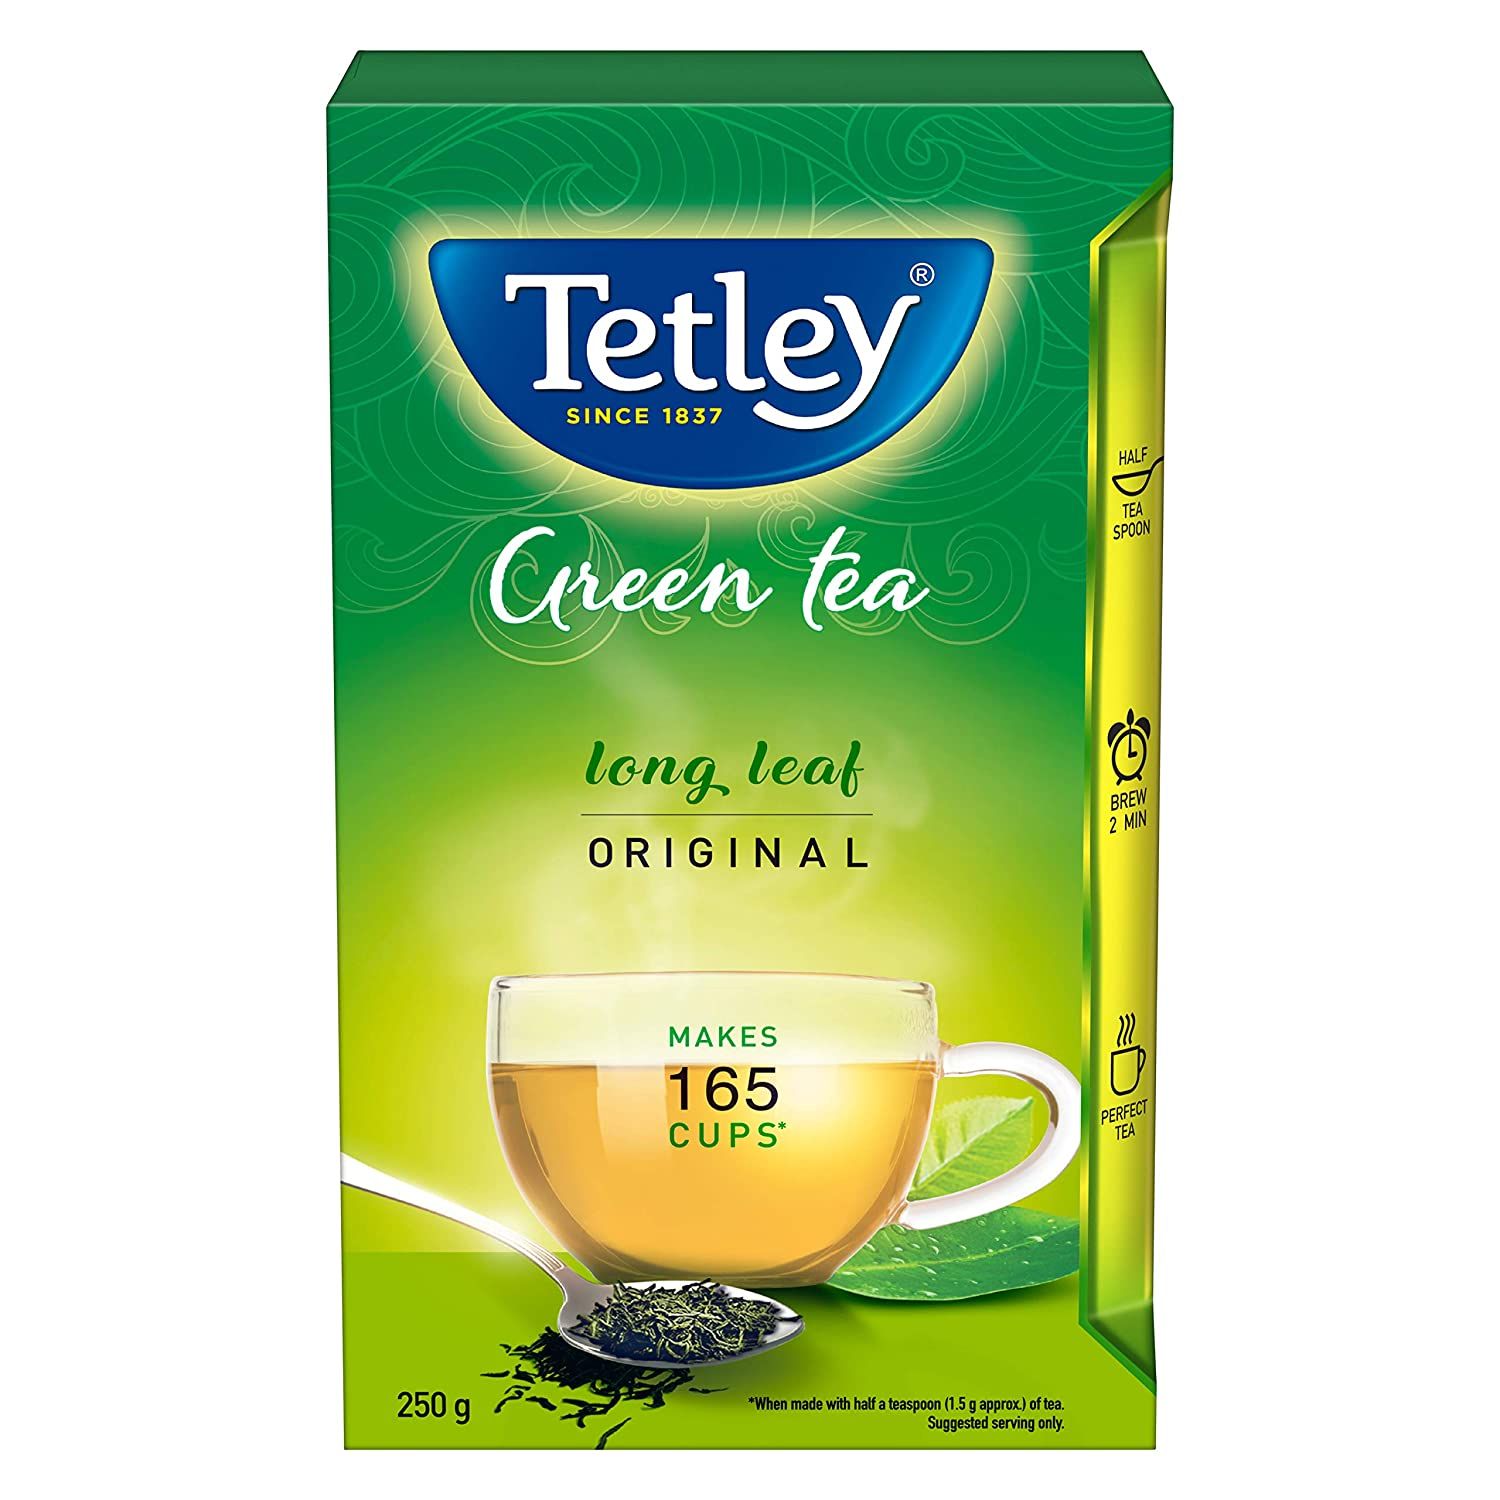 Tetley Long Leaf Green Tea Image